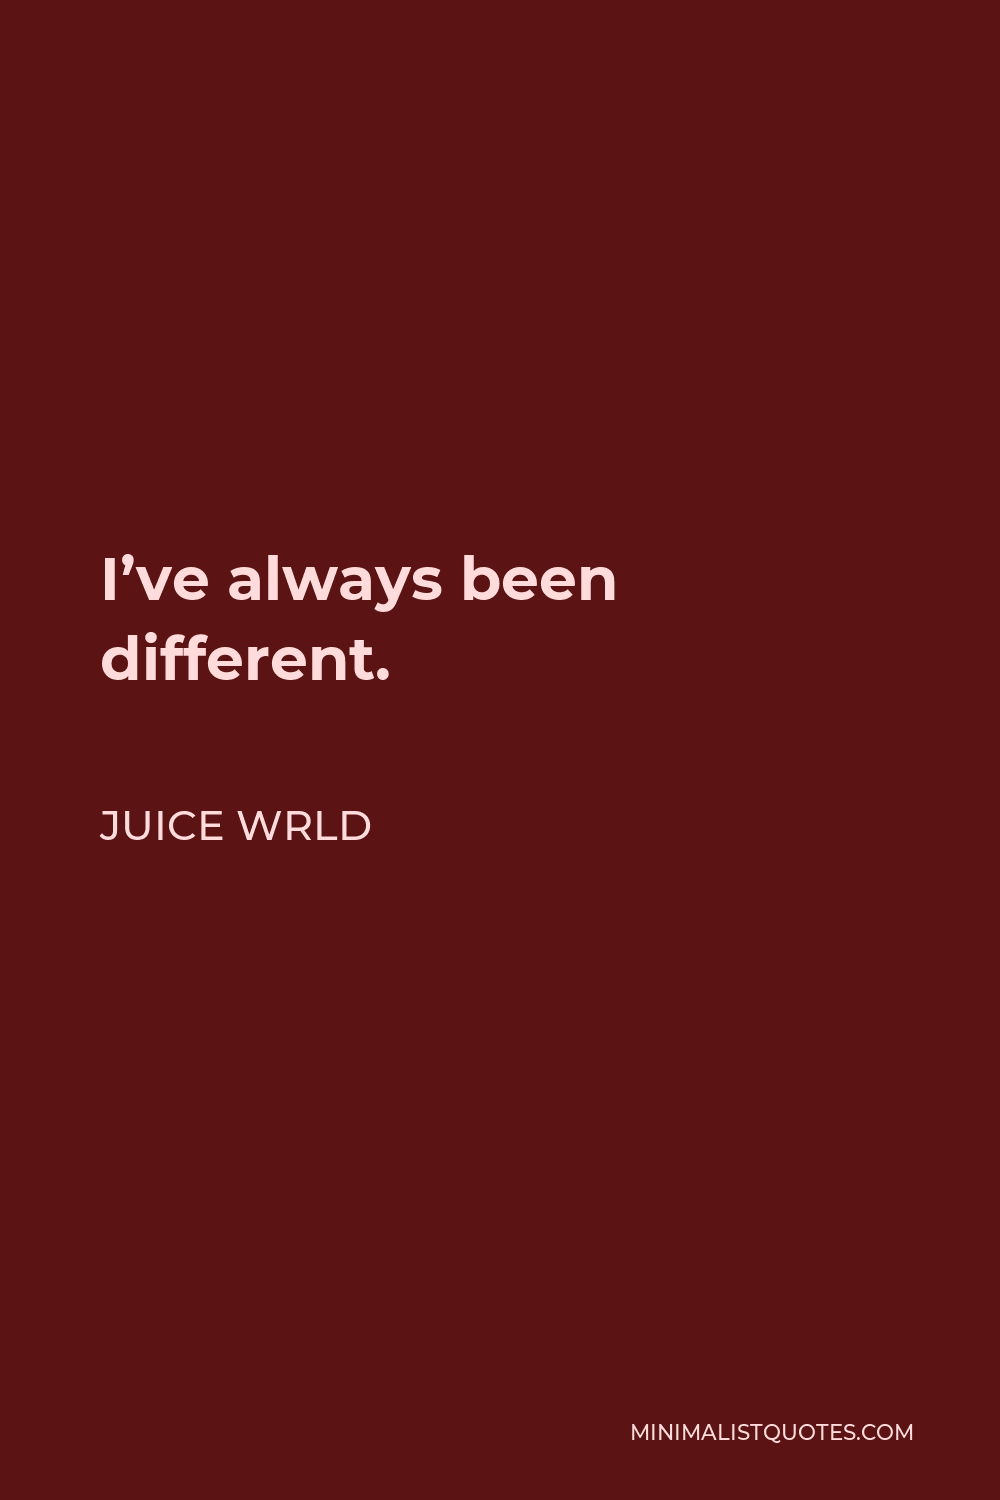 Juice Wrld Quote - I’ve always been different.